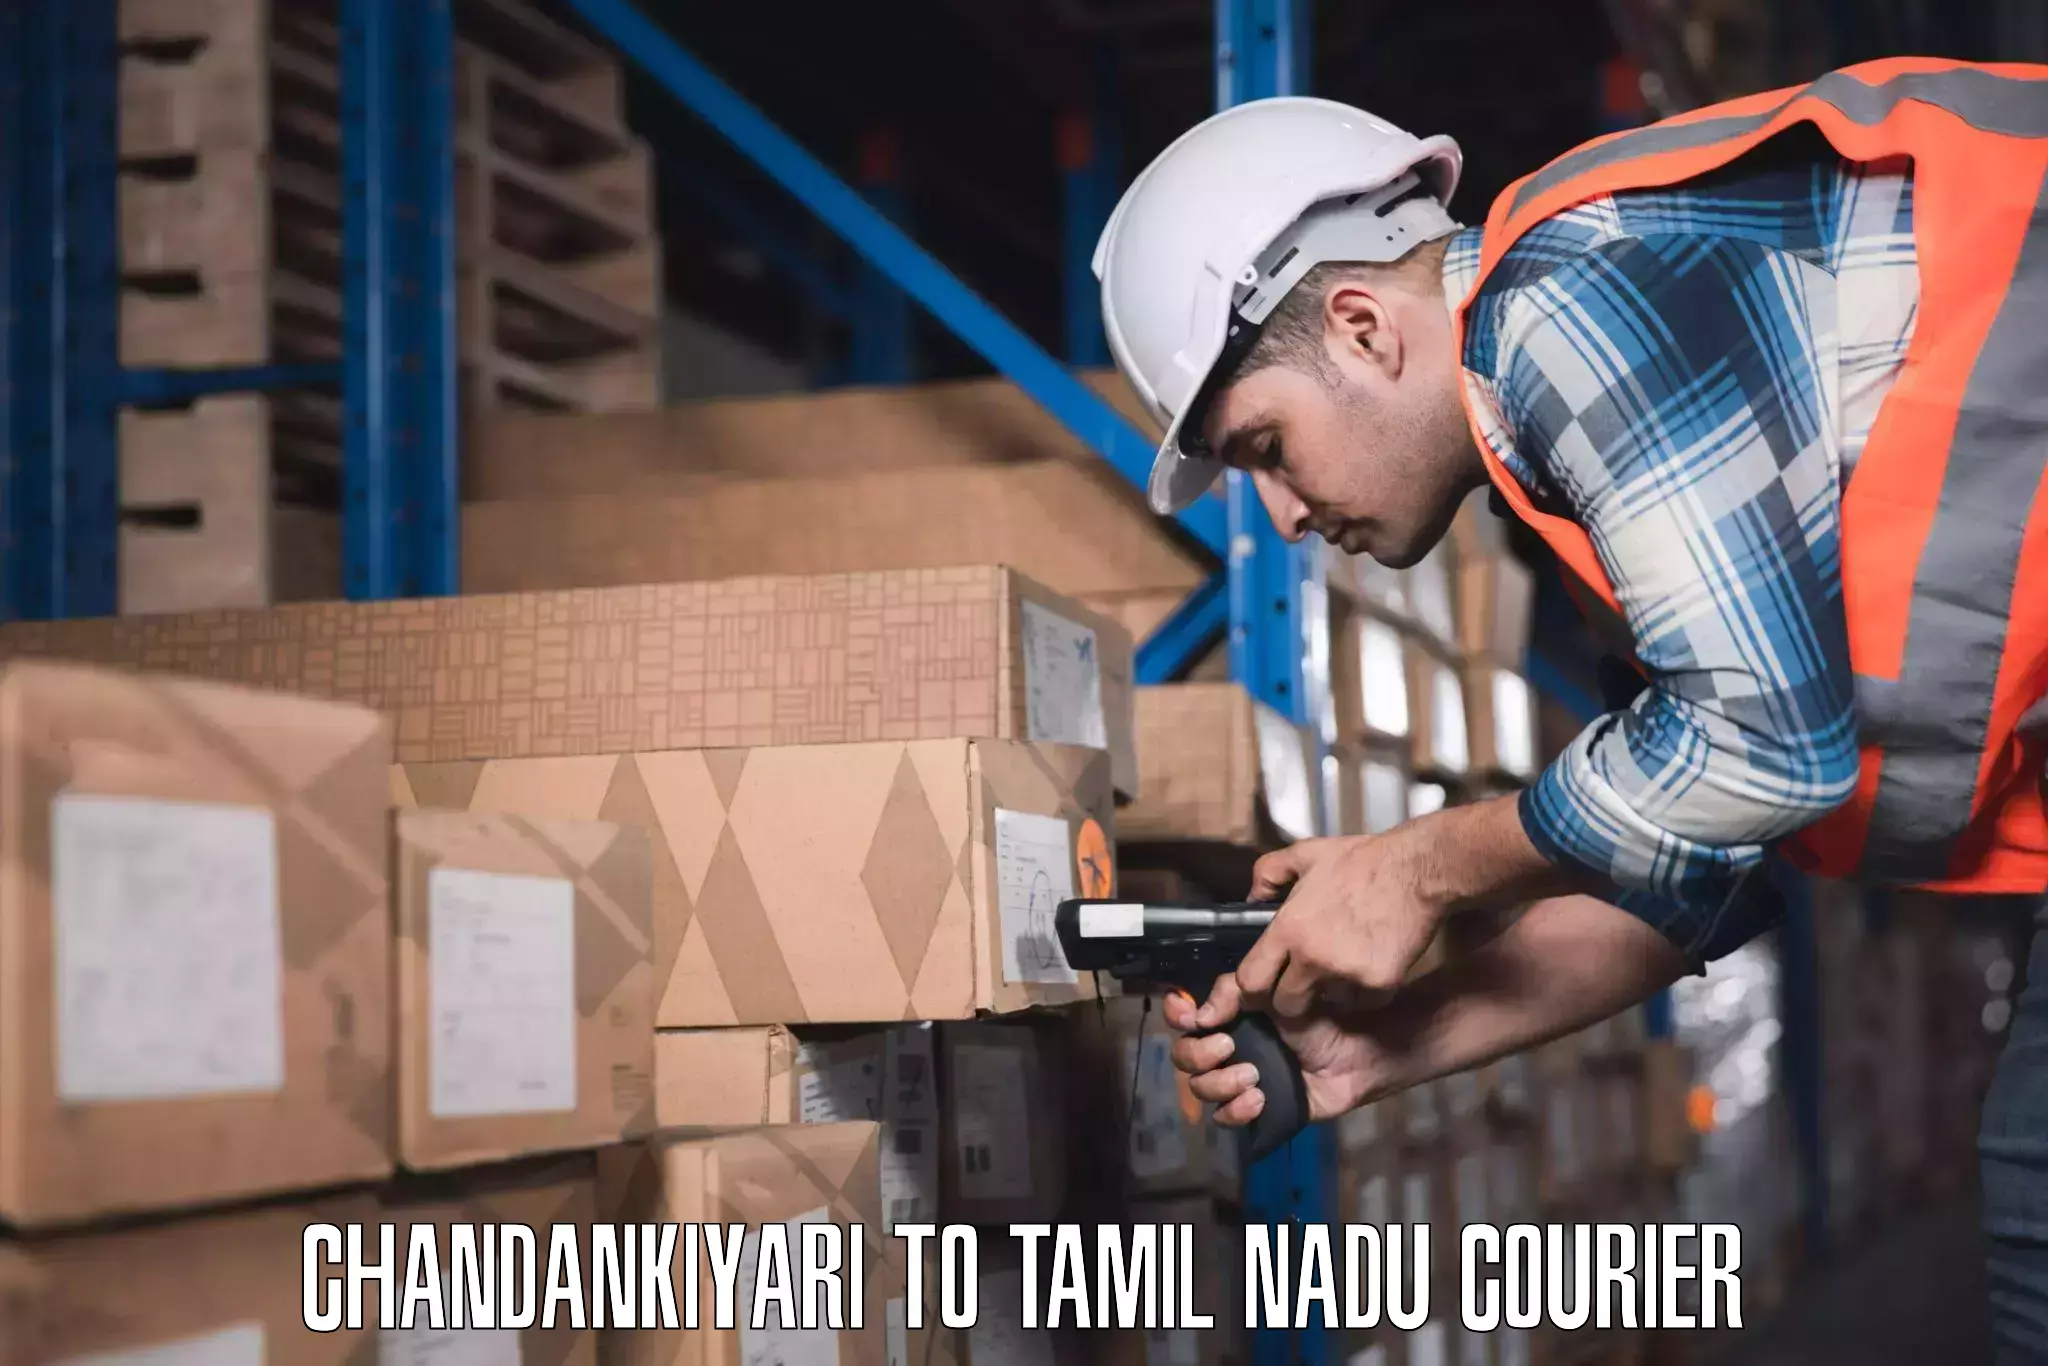 Luggage transport company Chandankiyari to Chennai Port